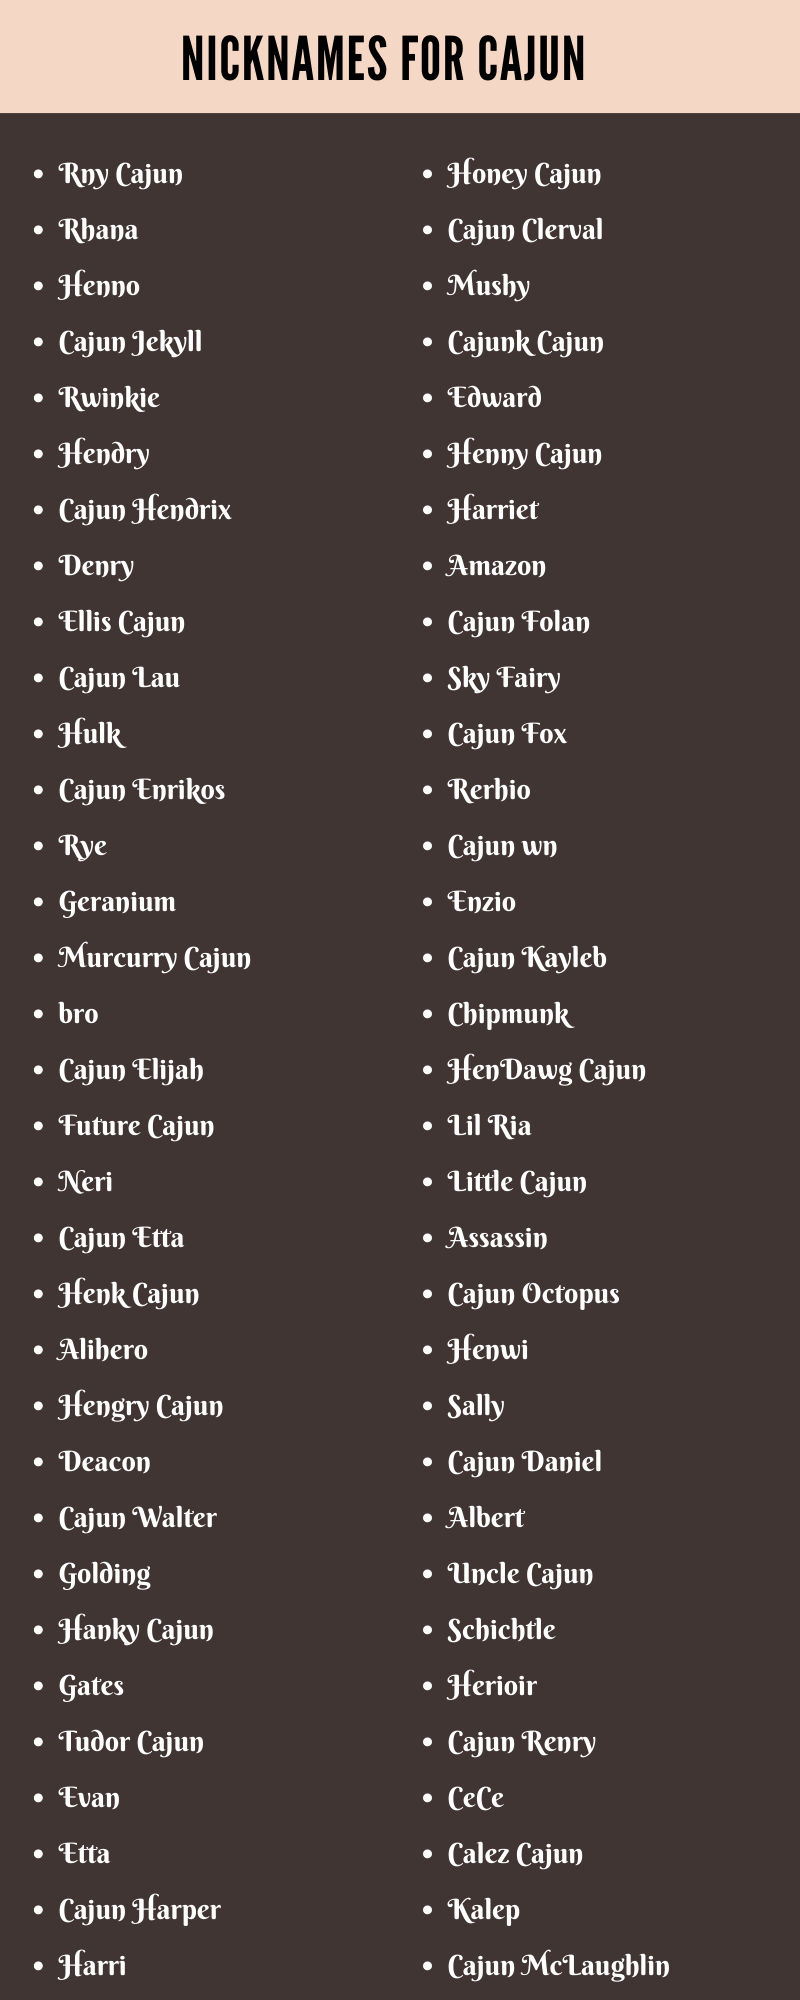 Nicknames For Cajun